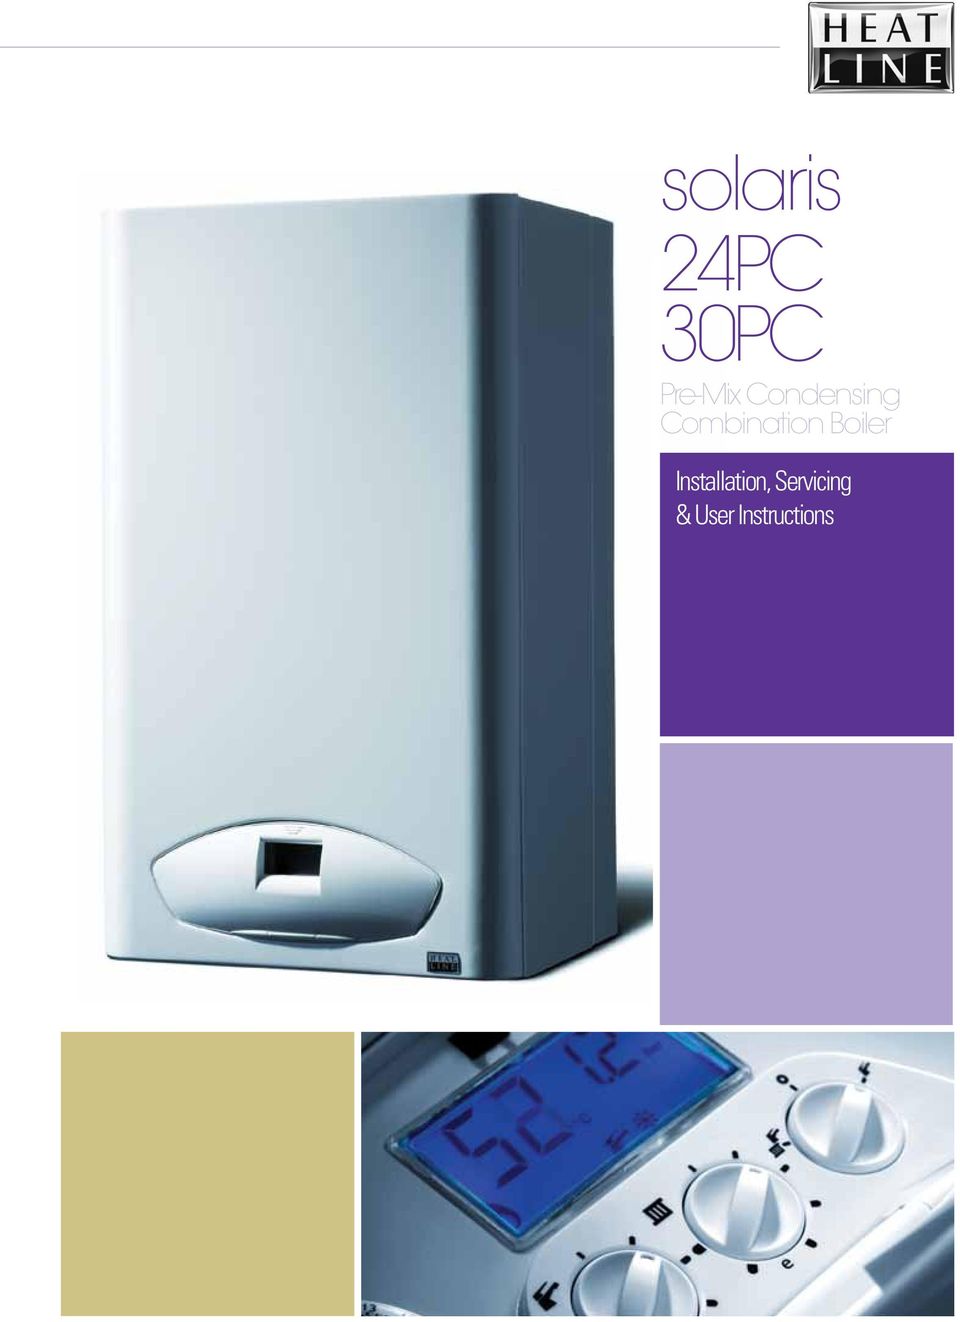 Telemacos Verplicht Troosteloos solaris 24PC 30PC Pre-Mix Condensing Combination Boiler - PDF Free Download